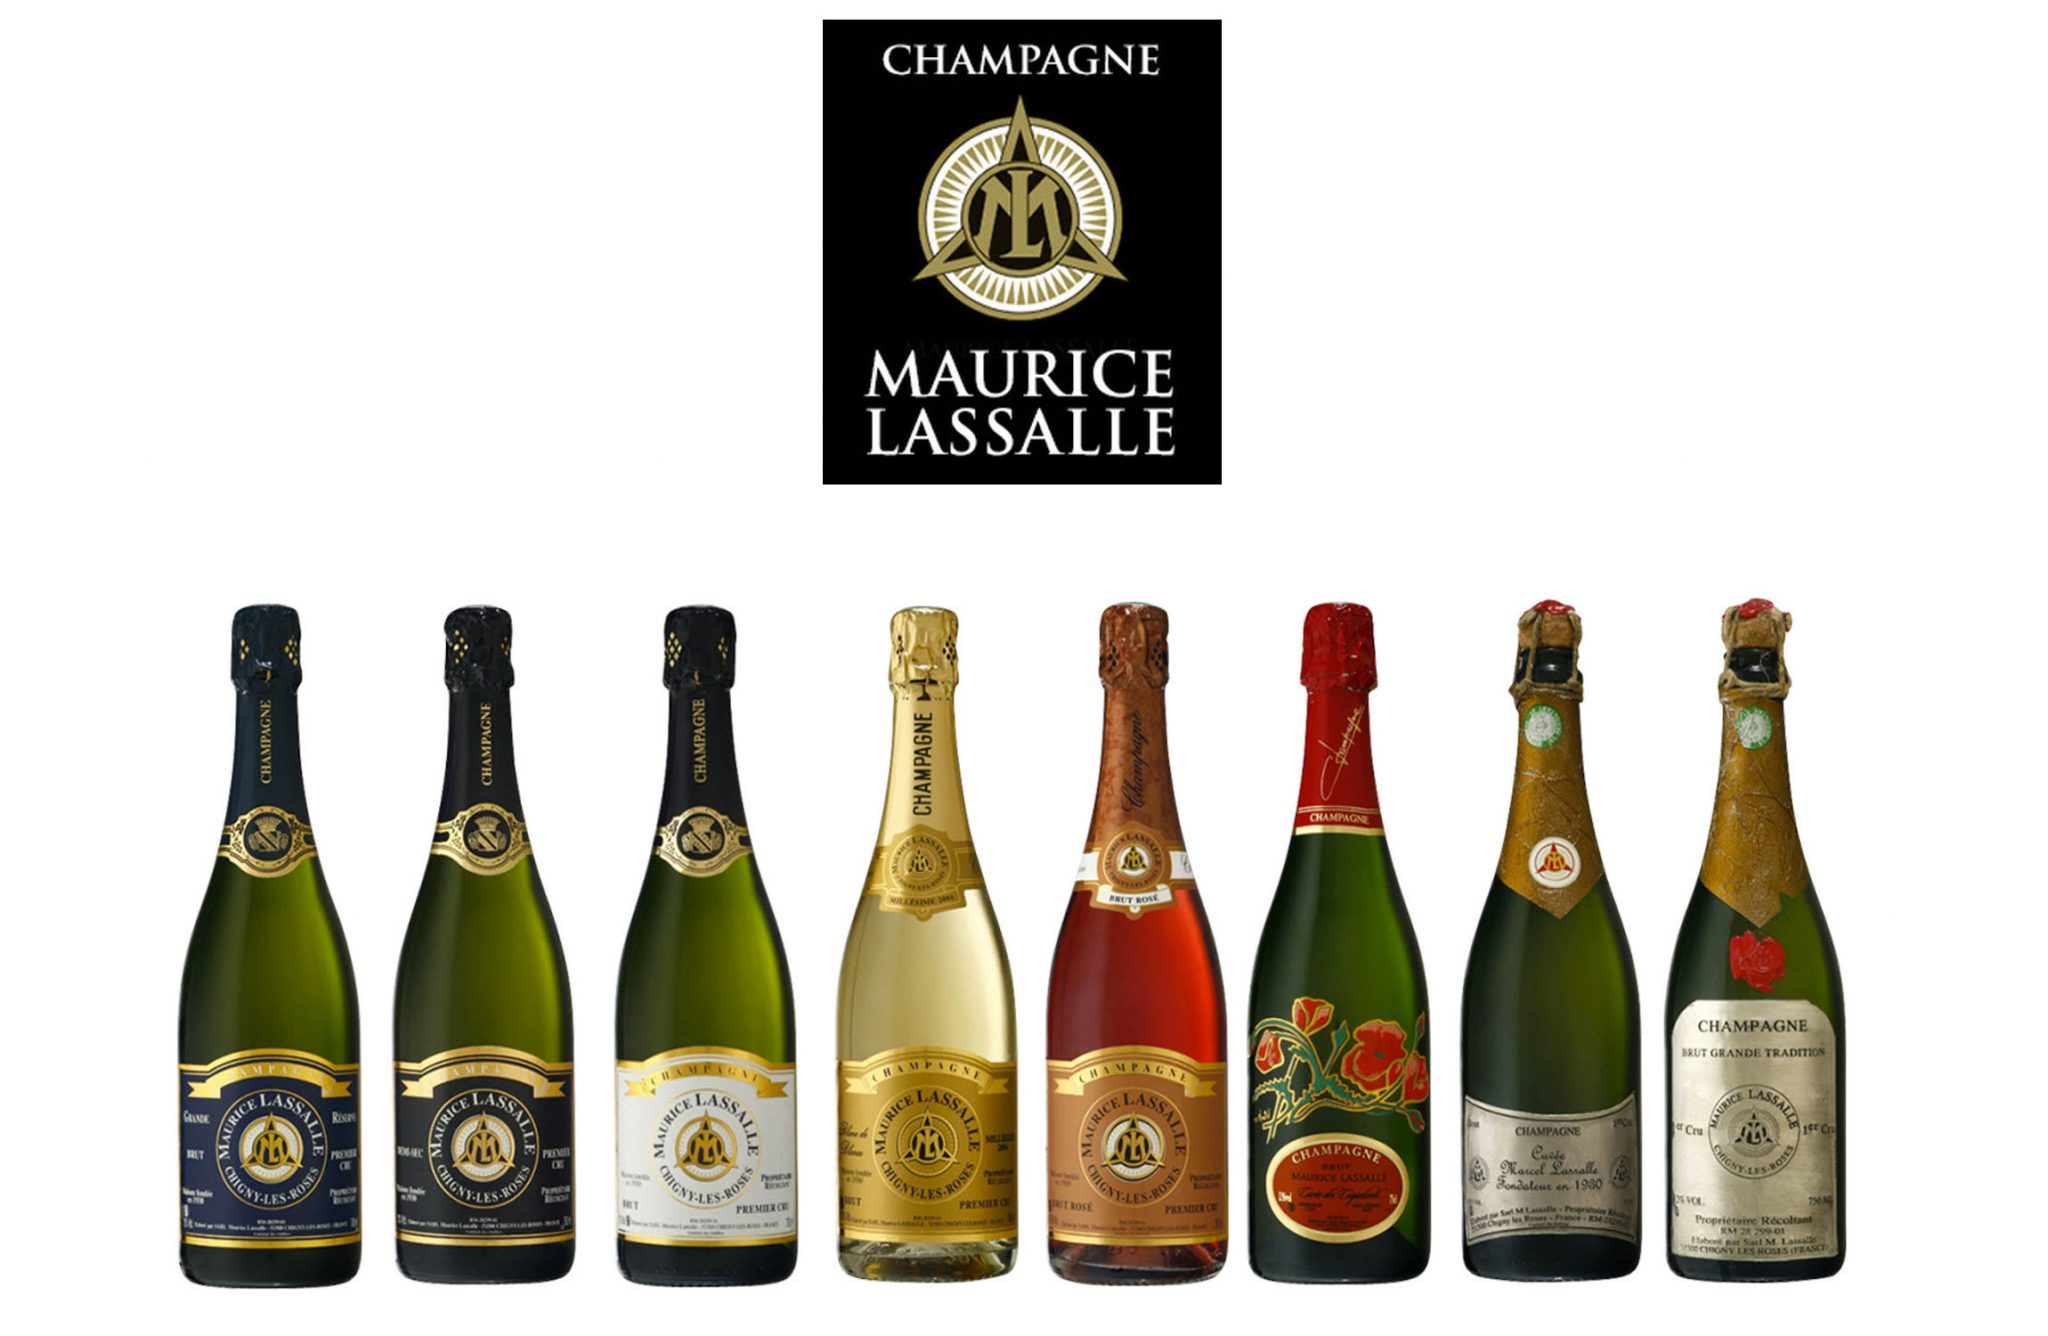 Champagne Maurice Lassalle